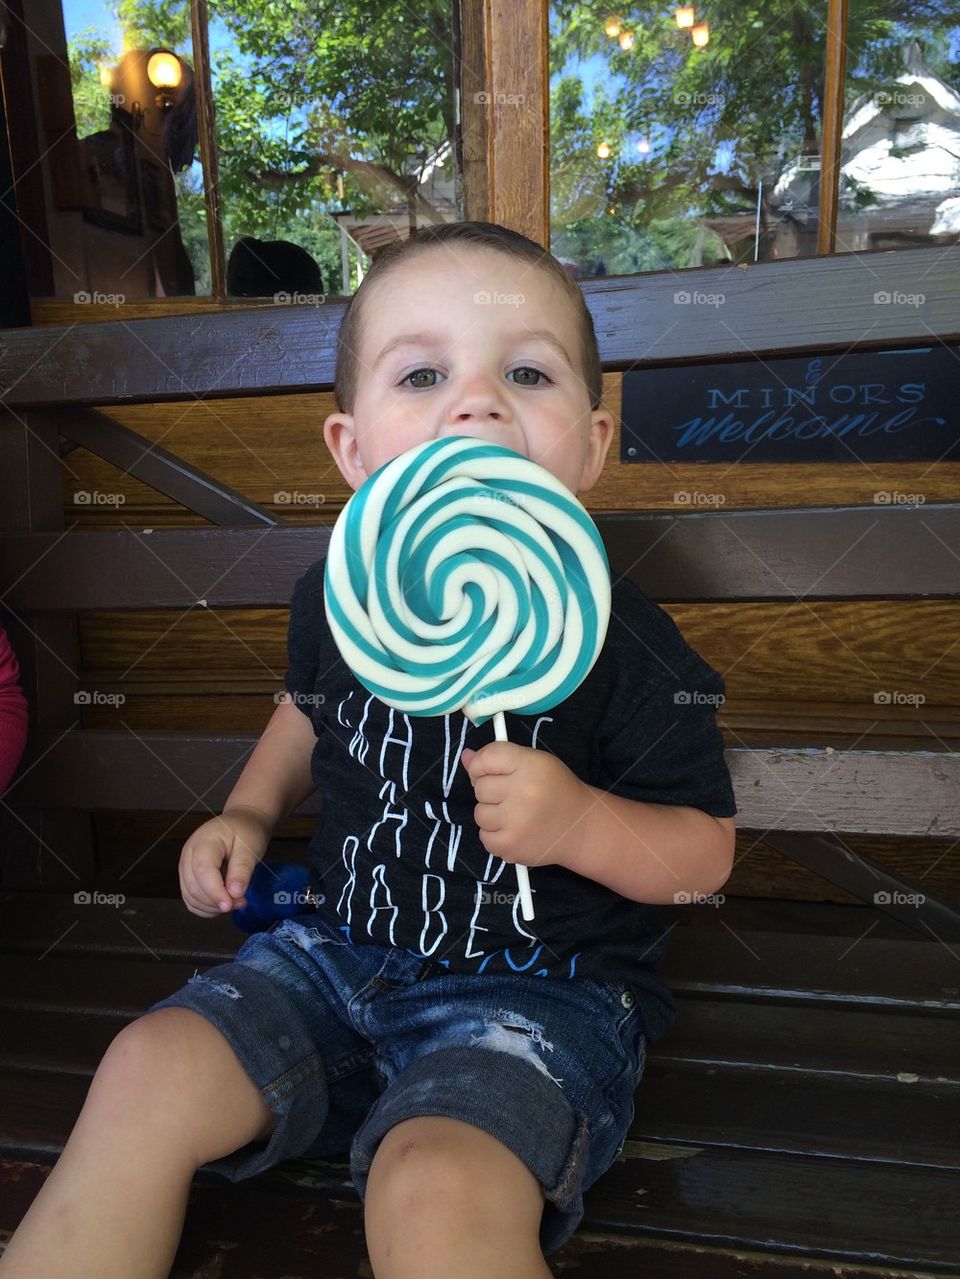 That lollipop!